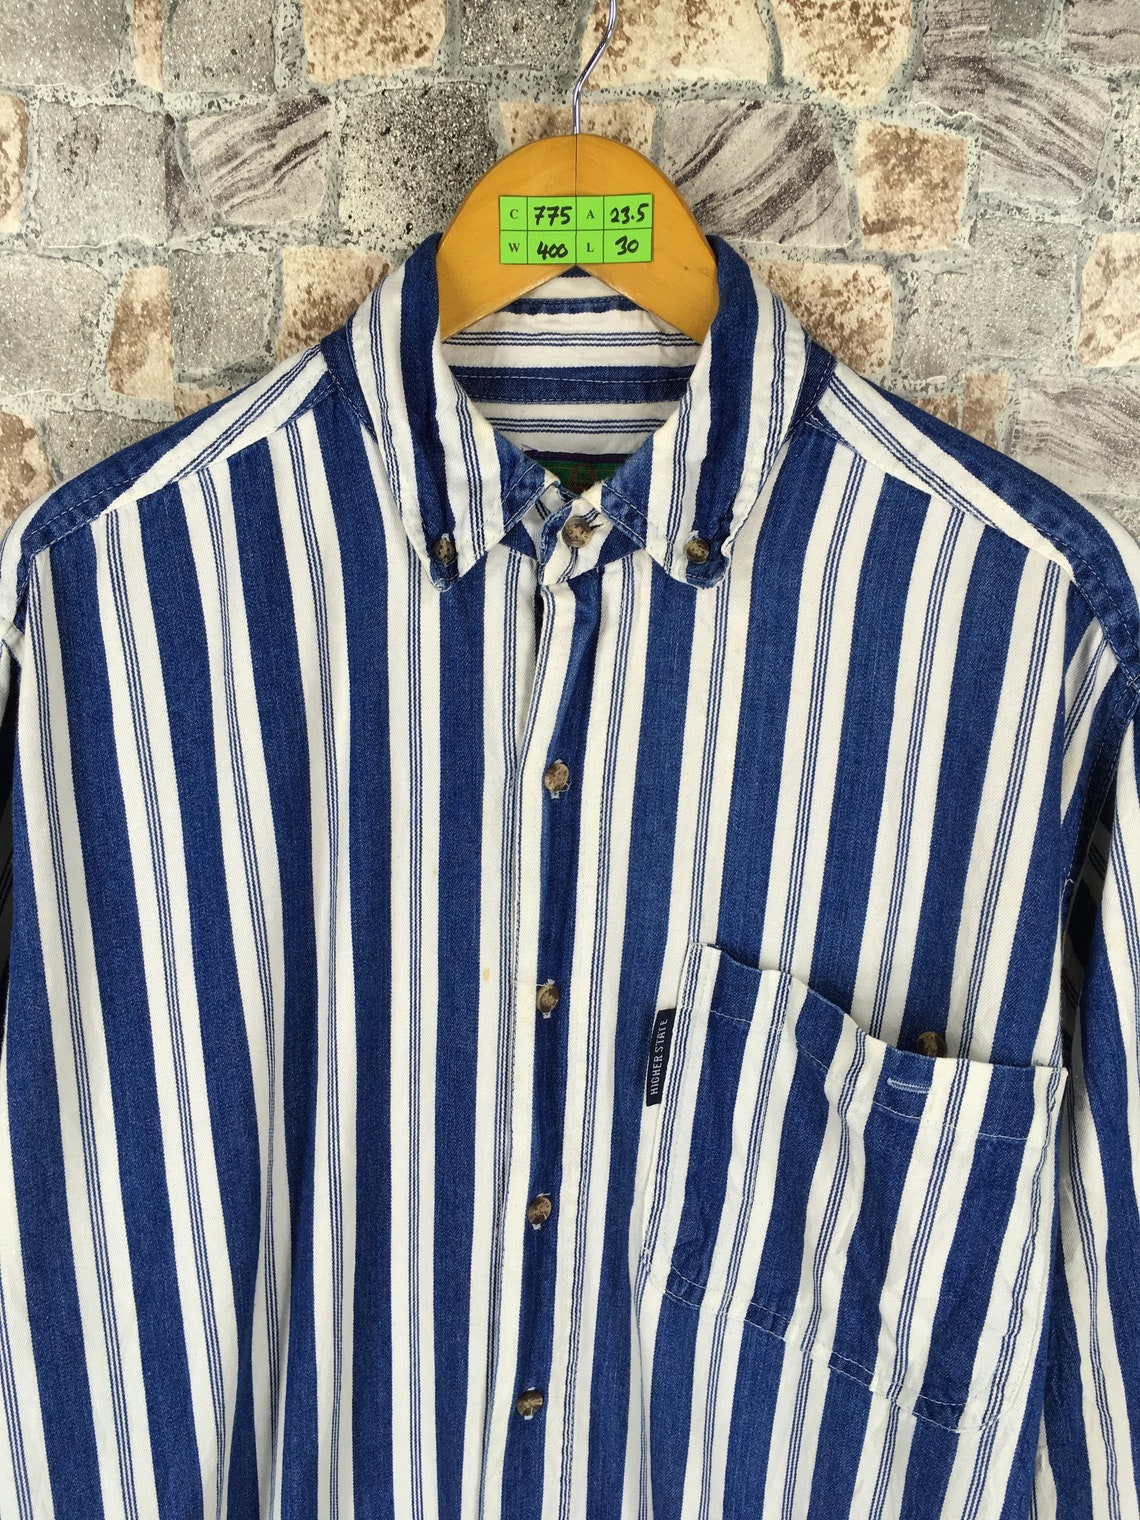 Vintage Higher State Striped Jail Denim Blue Button Up Shirt | Etsy